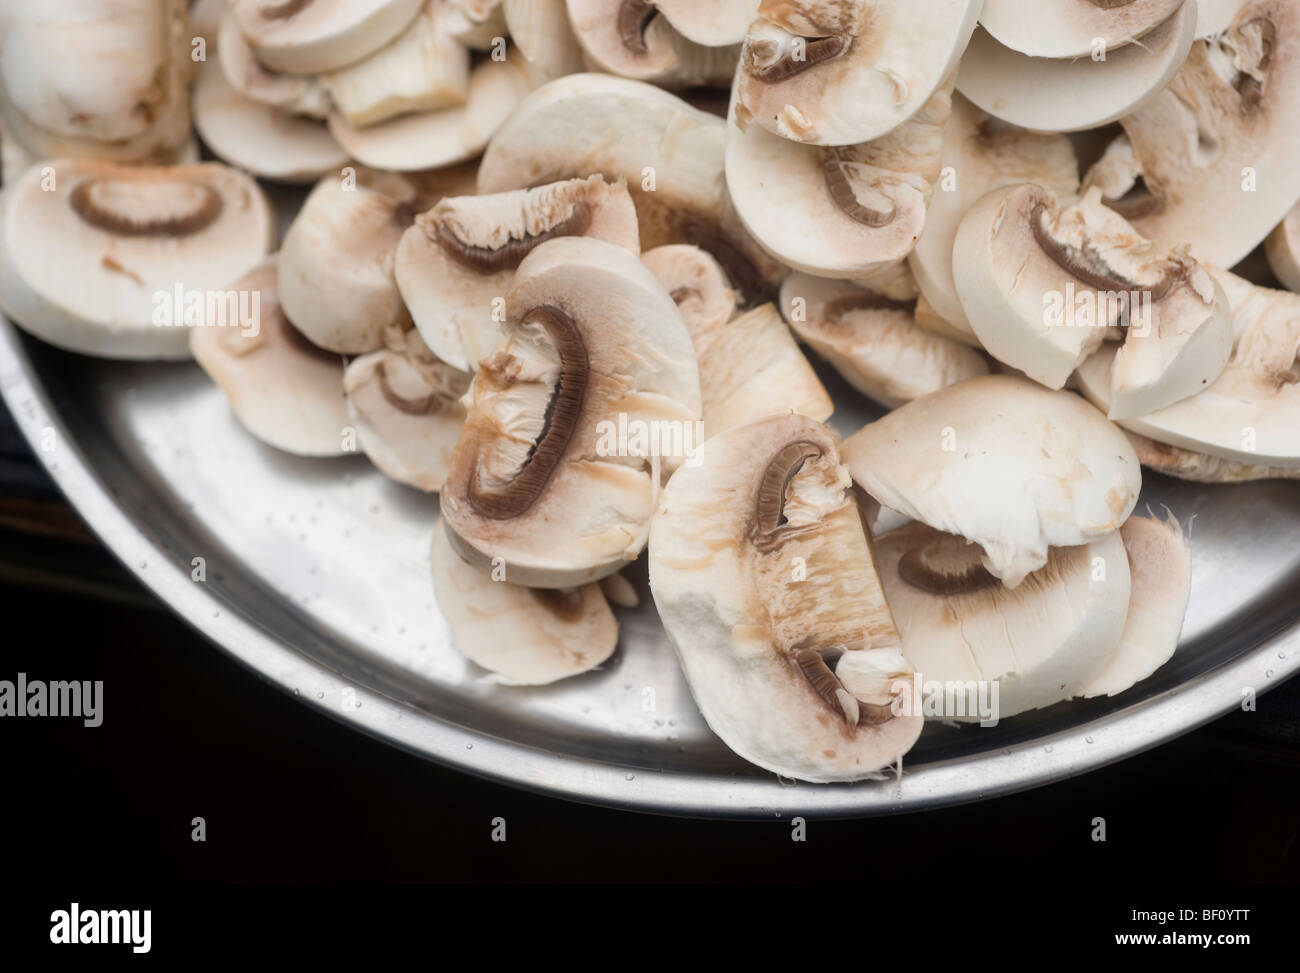 Sliced mushrooms on an aluminum plate. Stock Photo